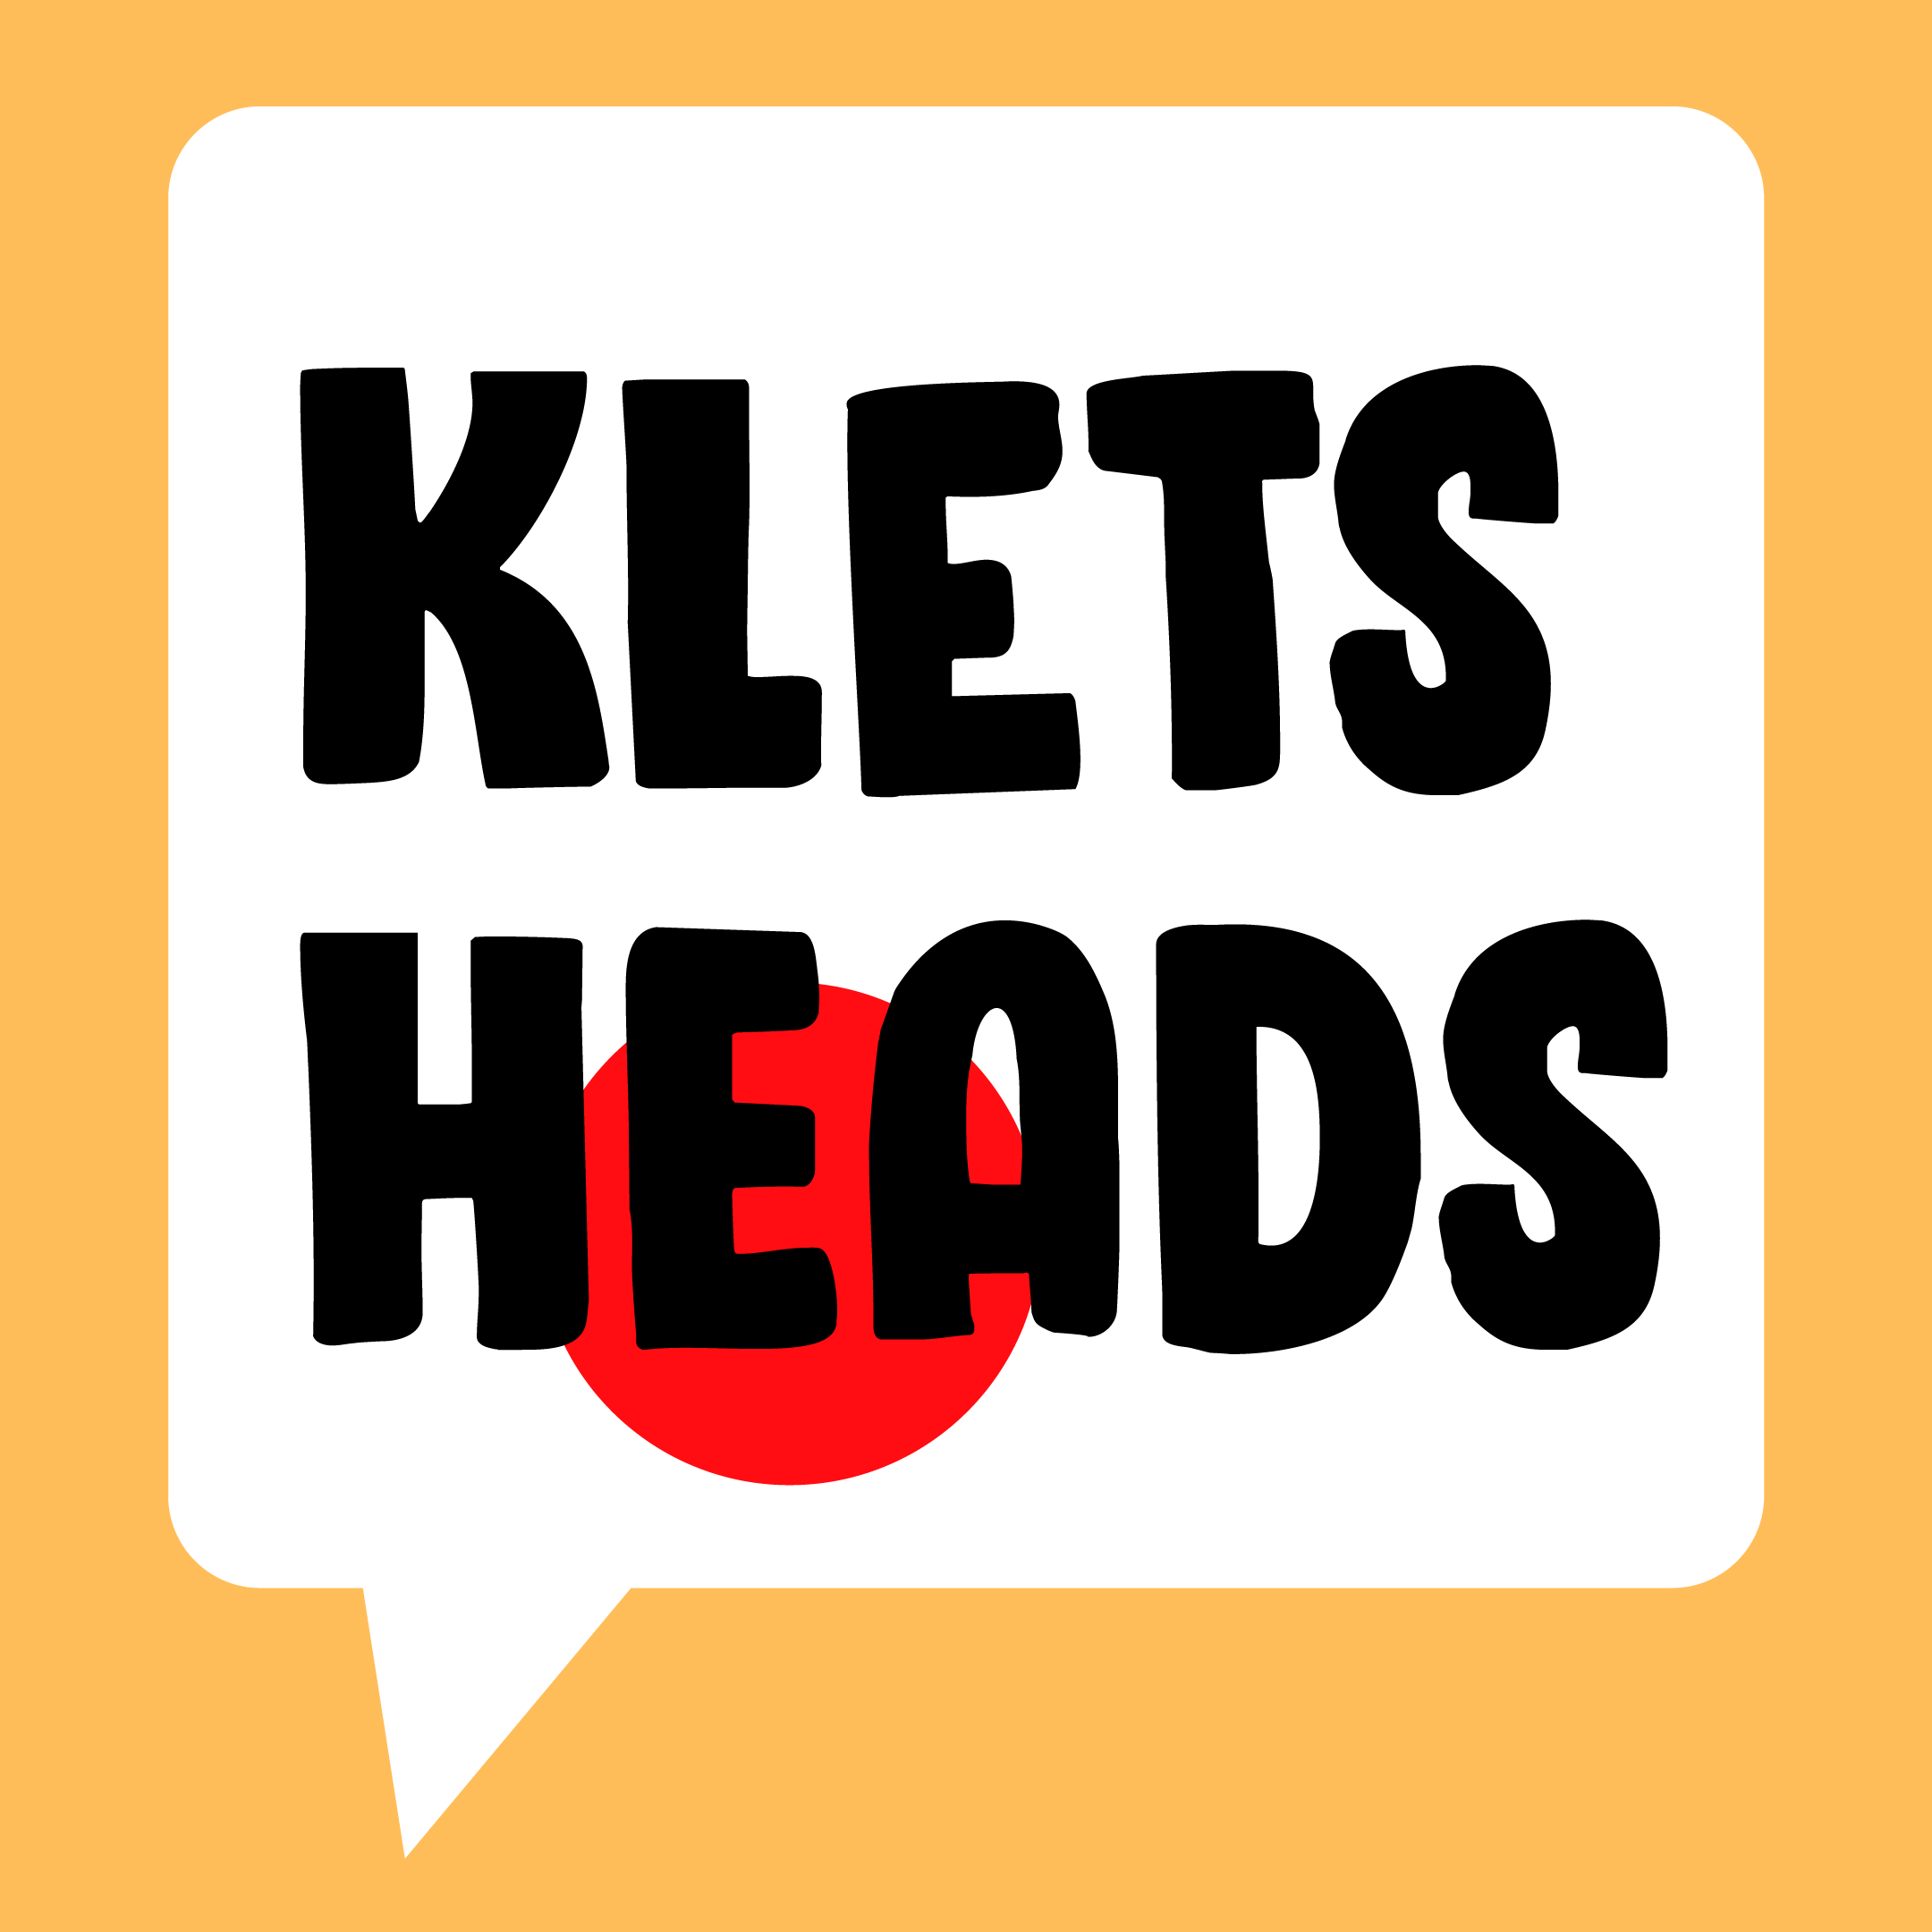 Kletsheads